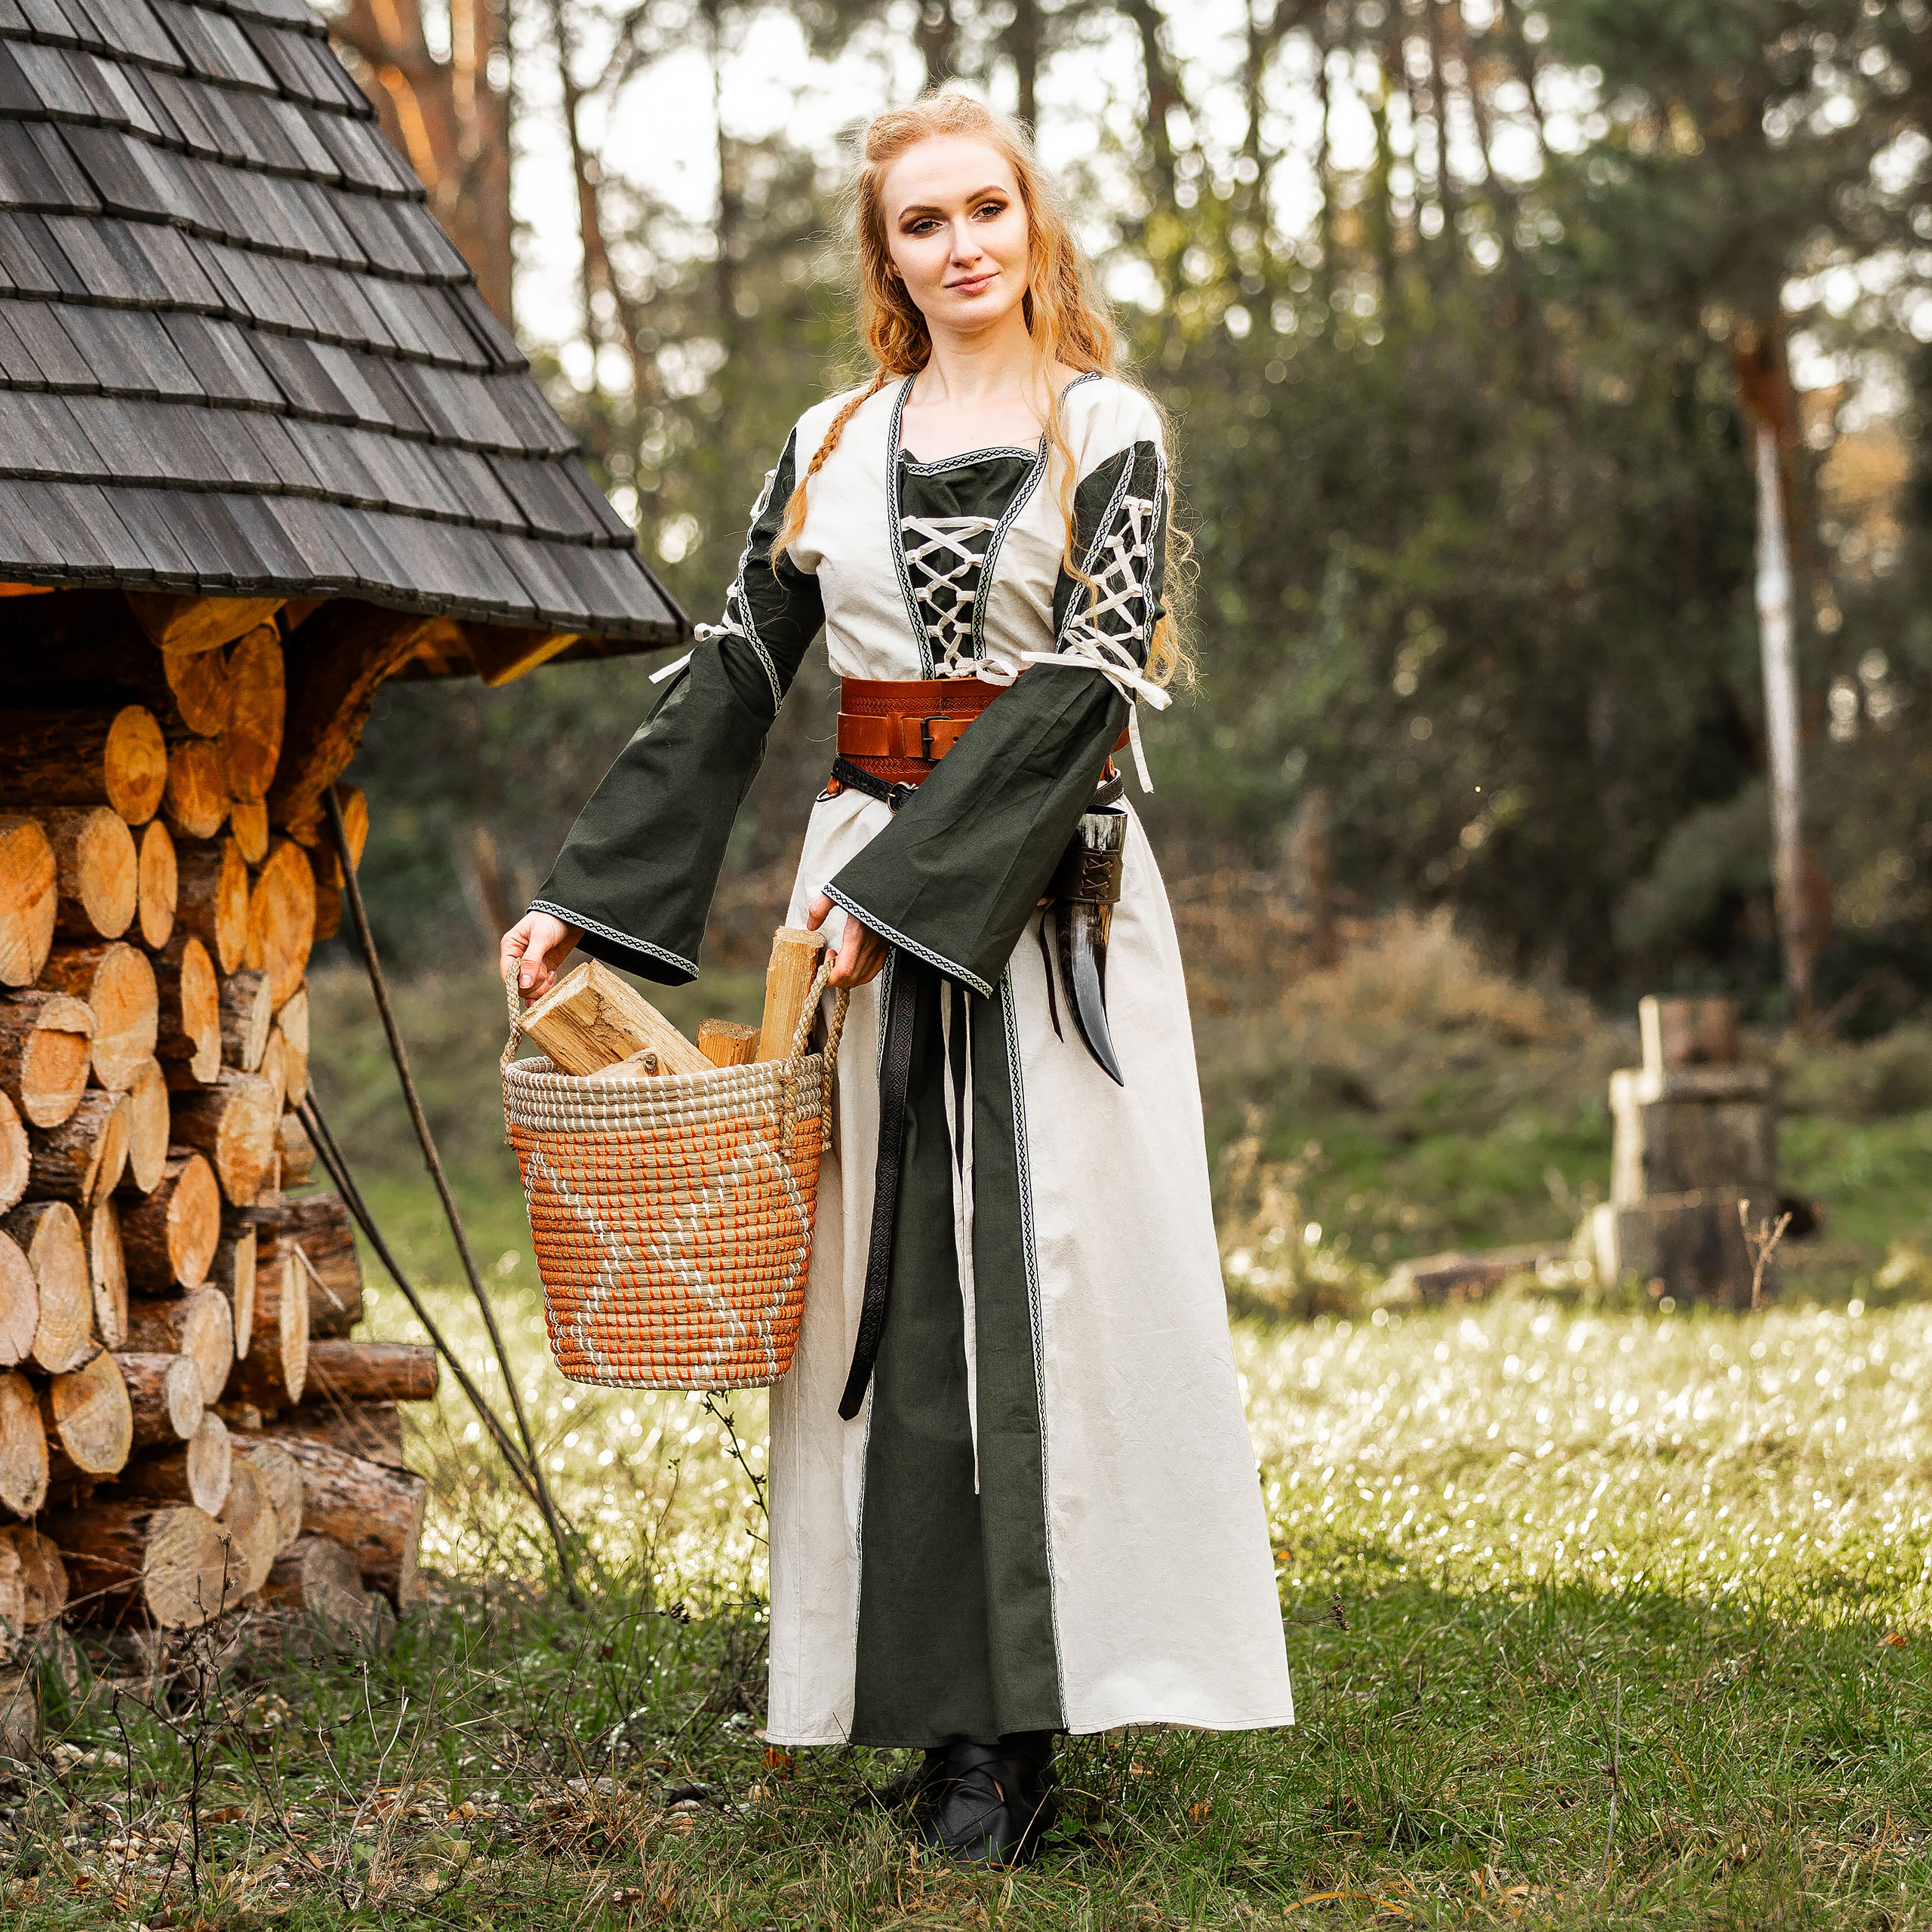 Robe médiévale avec laçage vert-nature